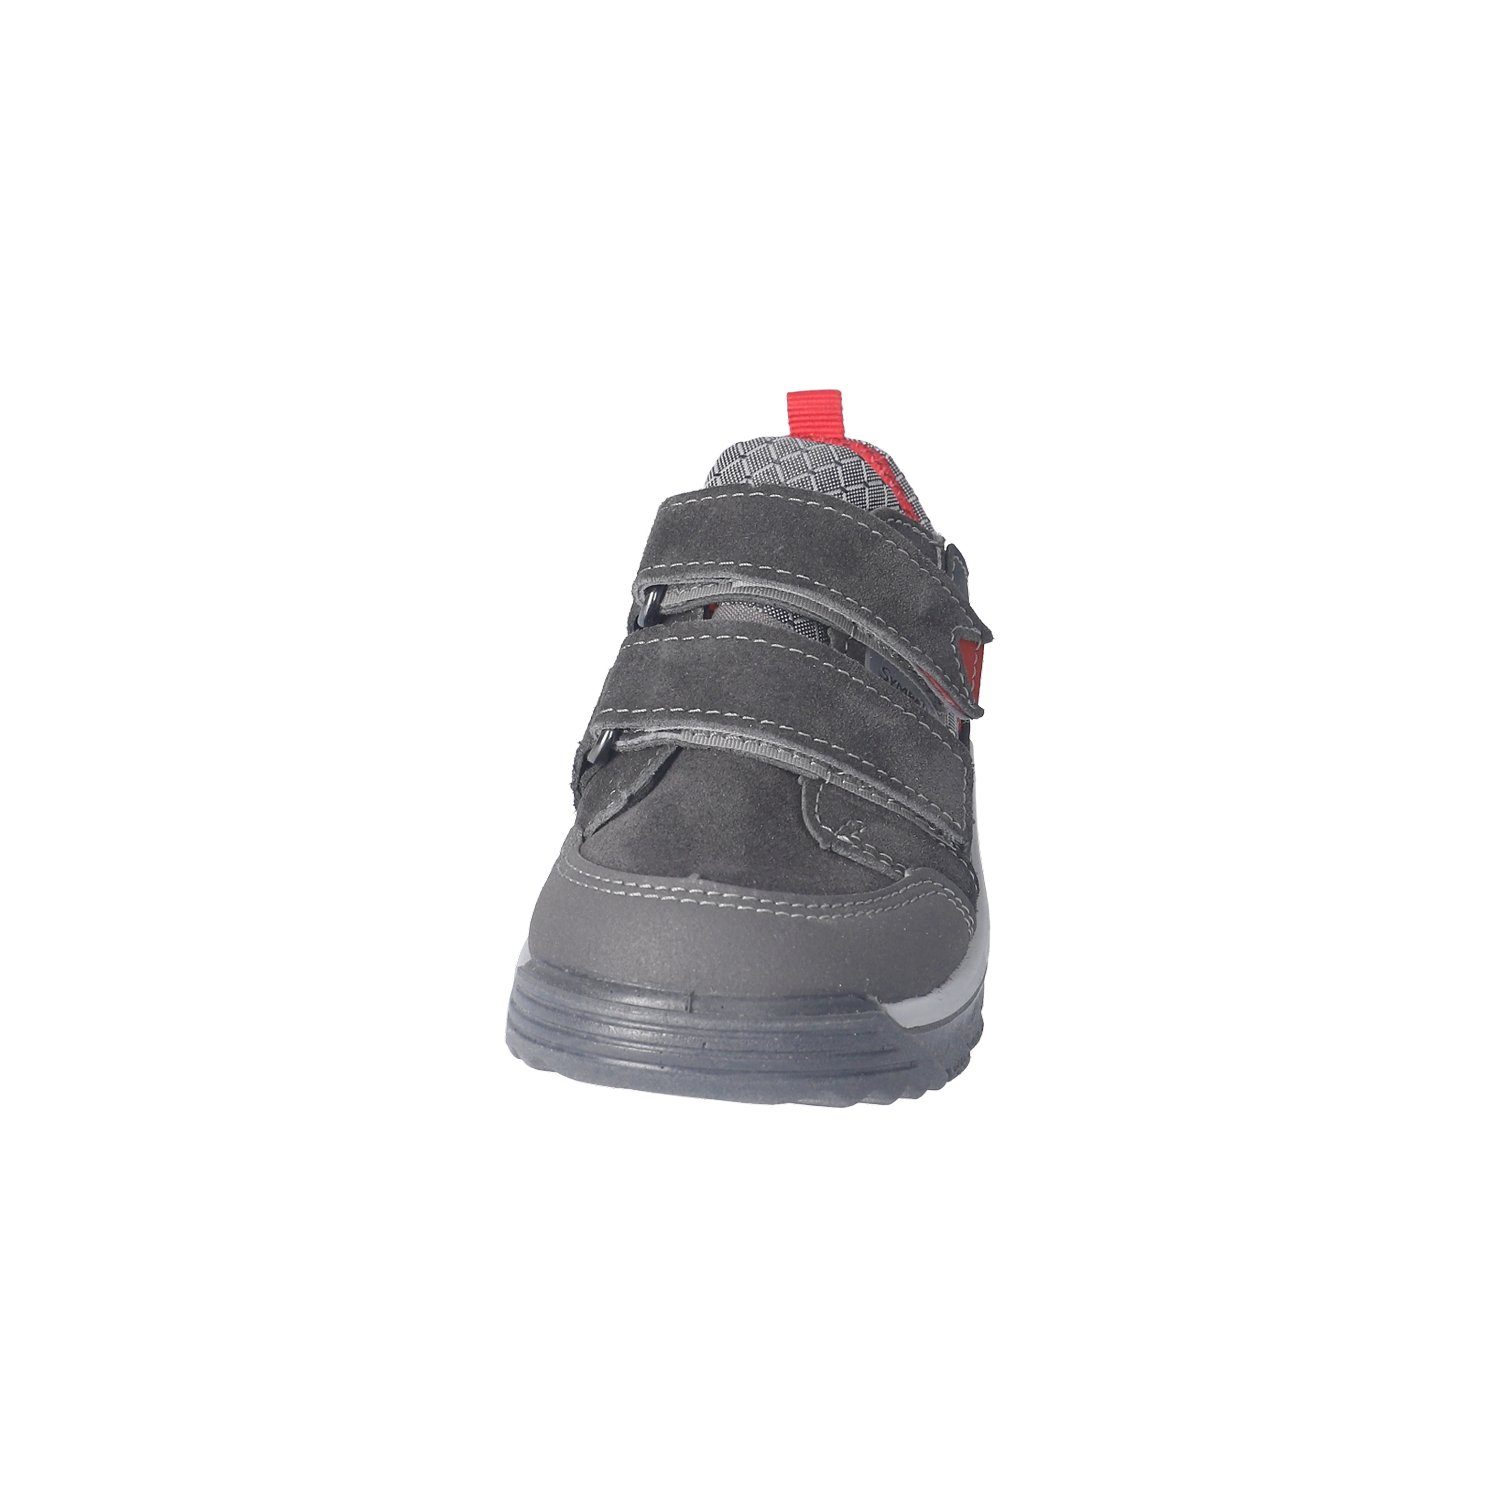 (490) Ricosta Sneaker asphalt/graphit